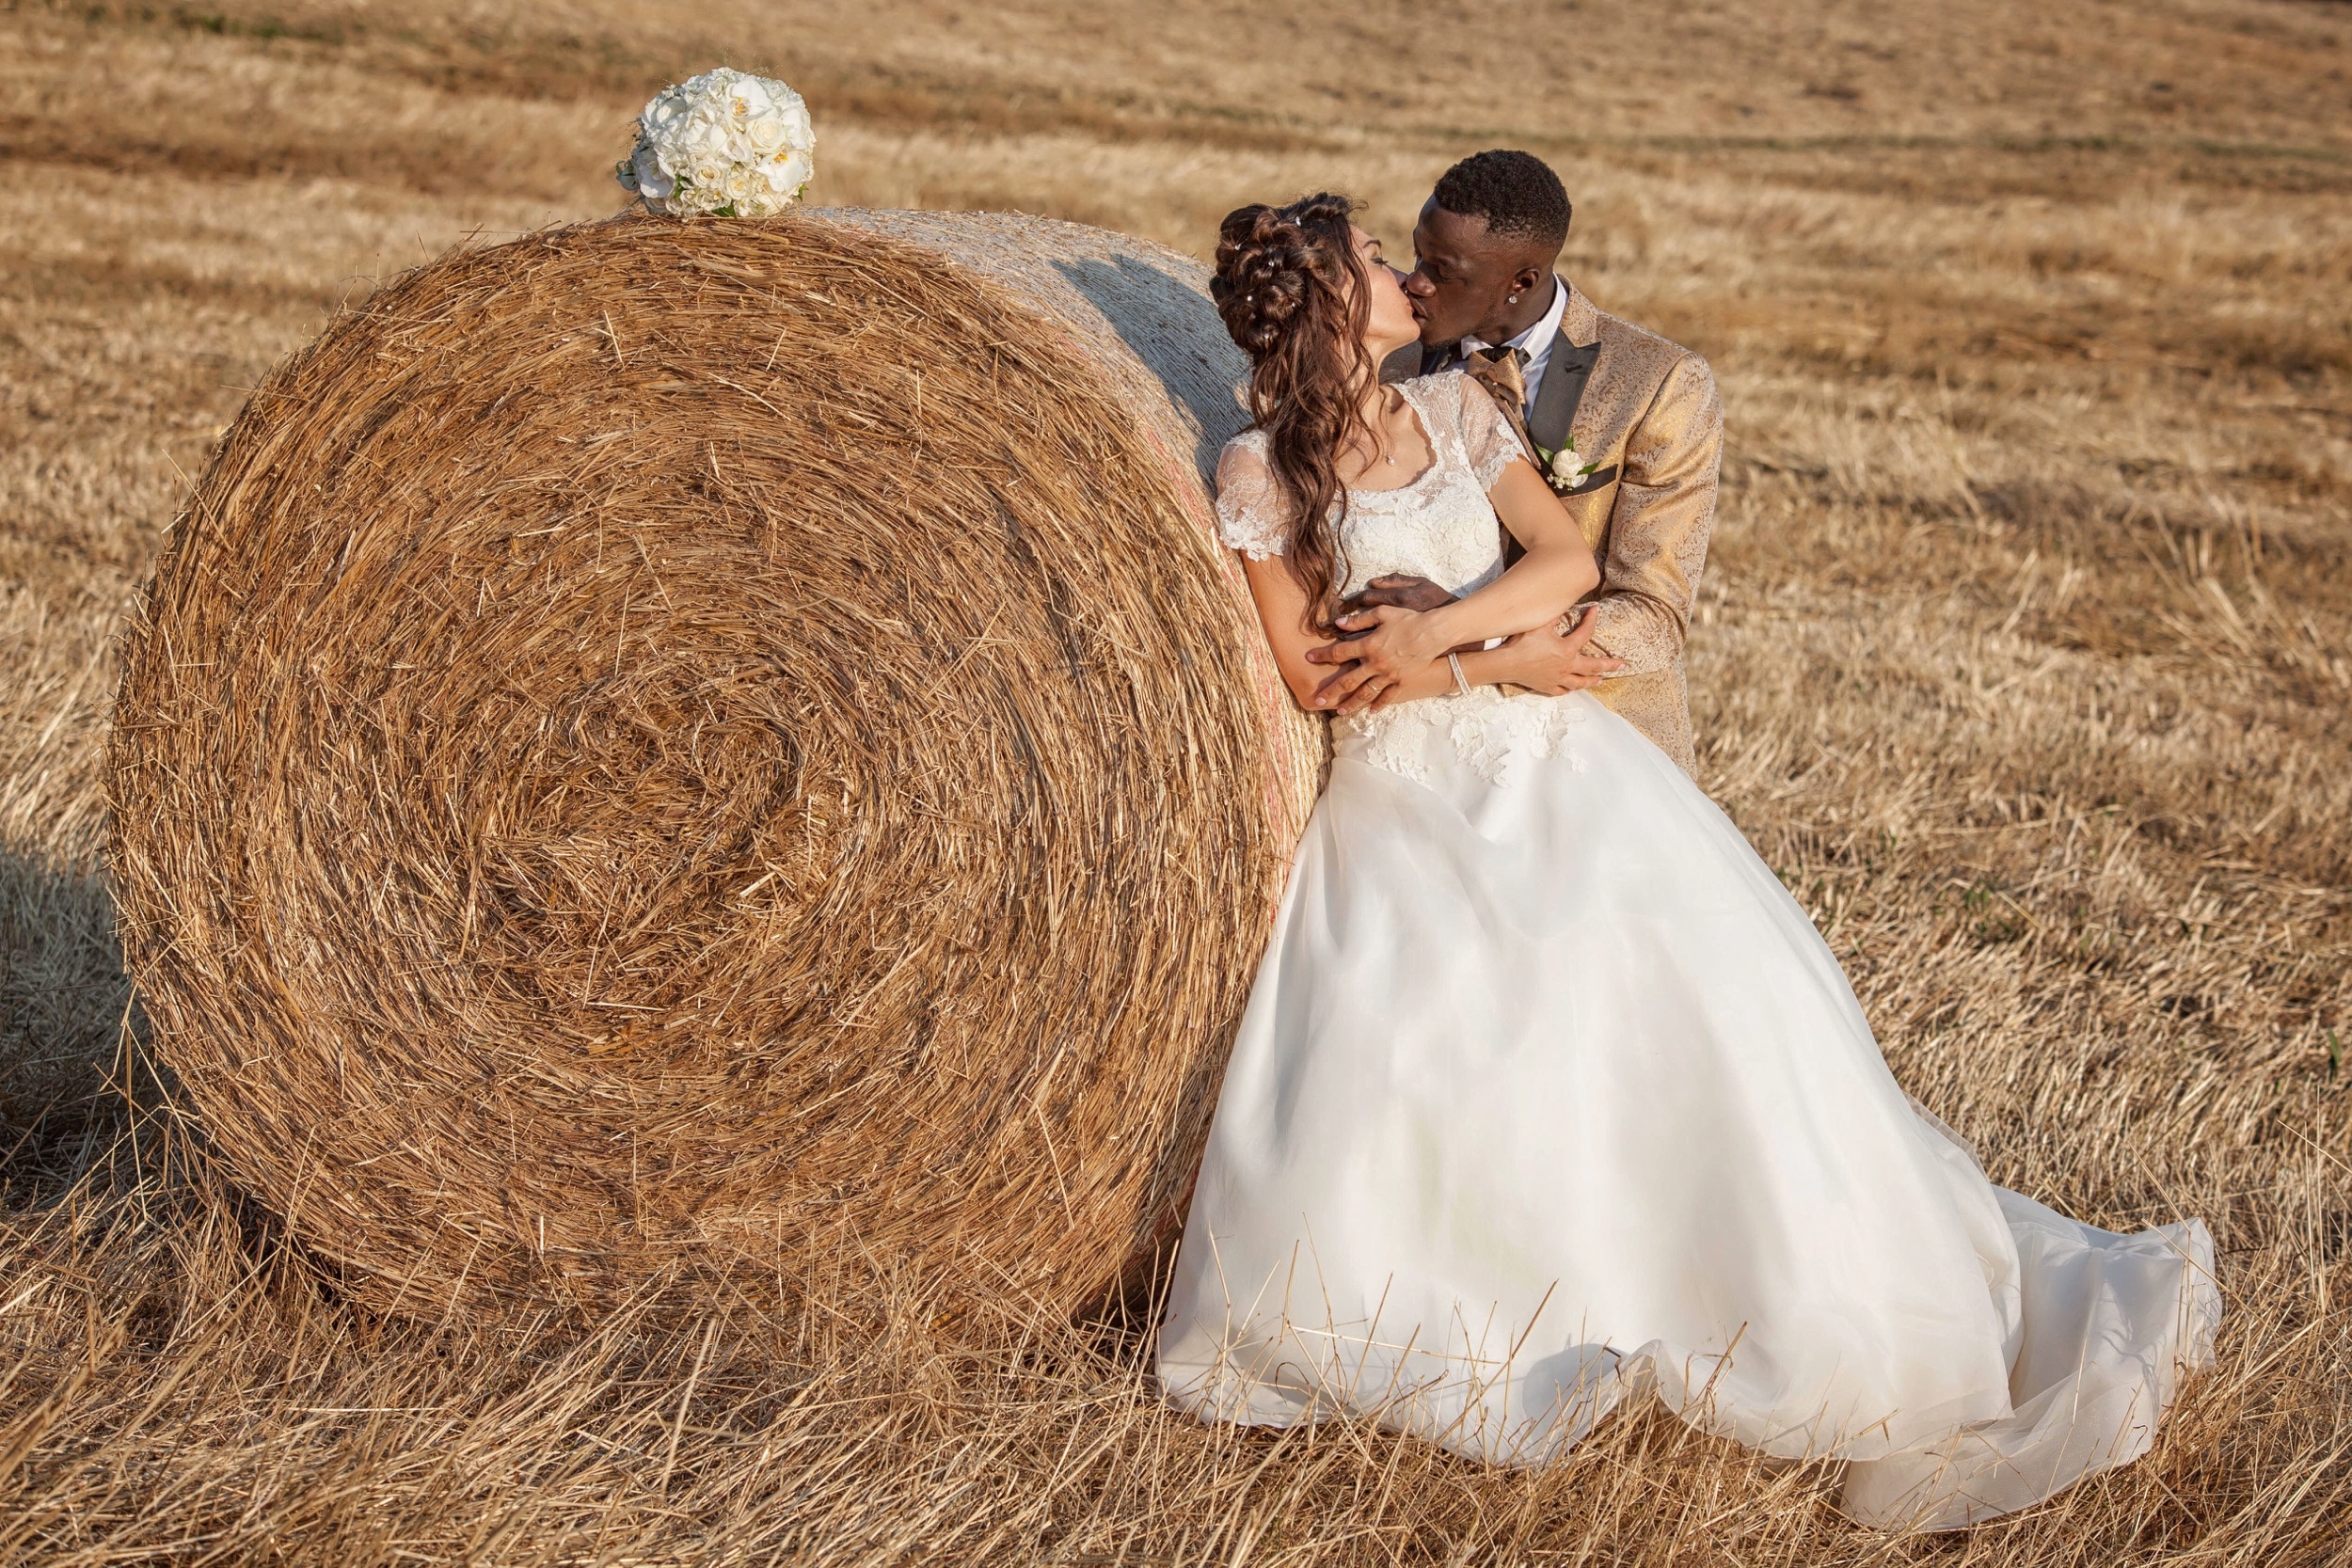 Just Married - Studio Fotografico Livorno background image